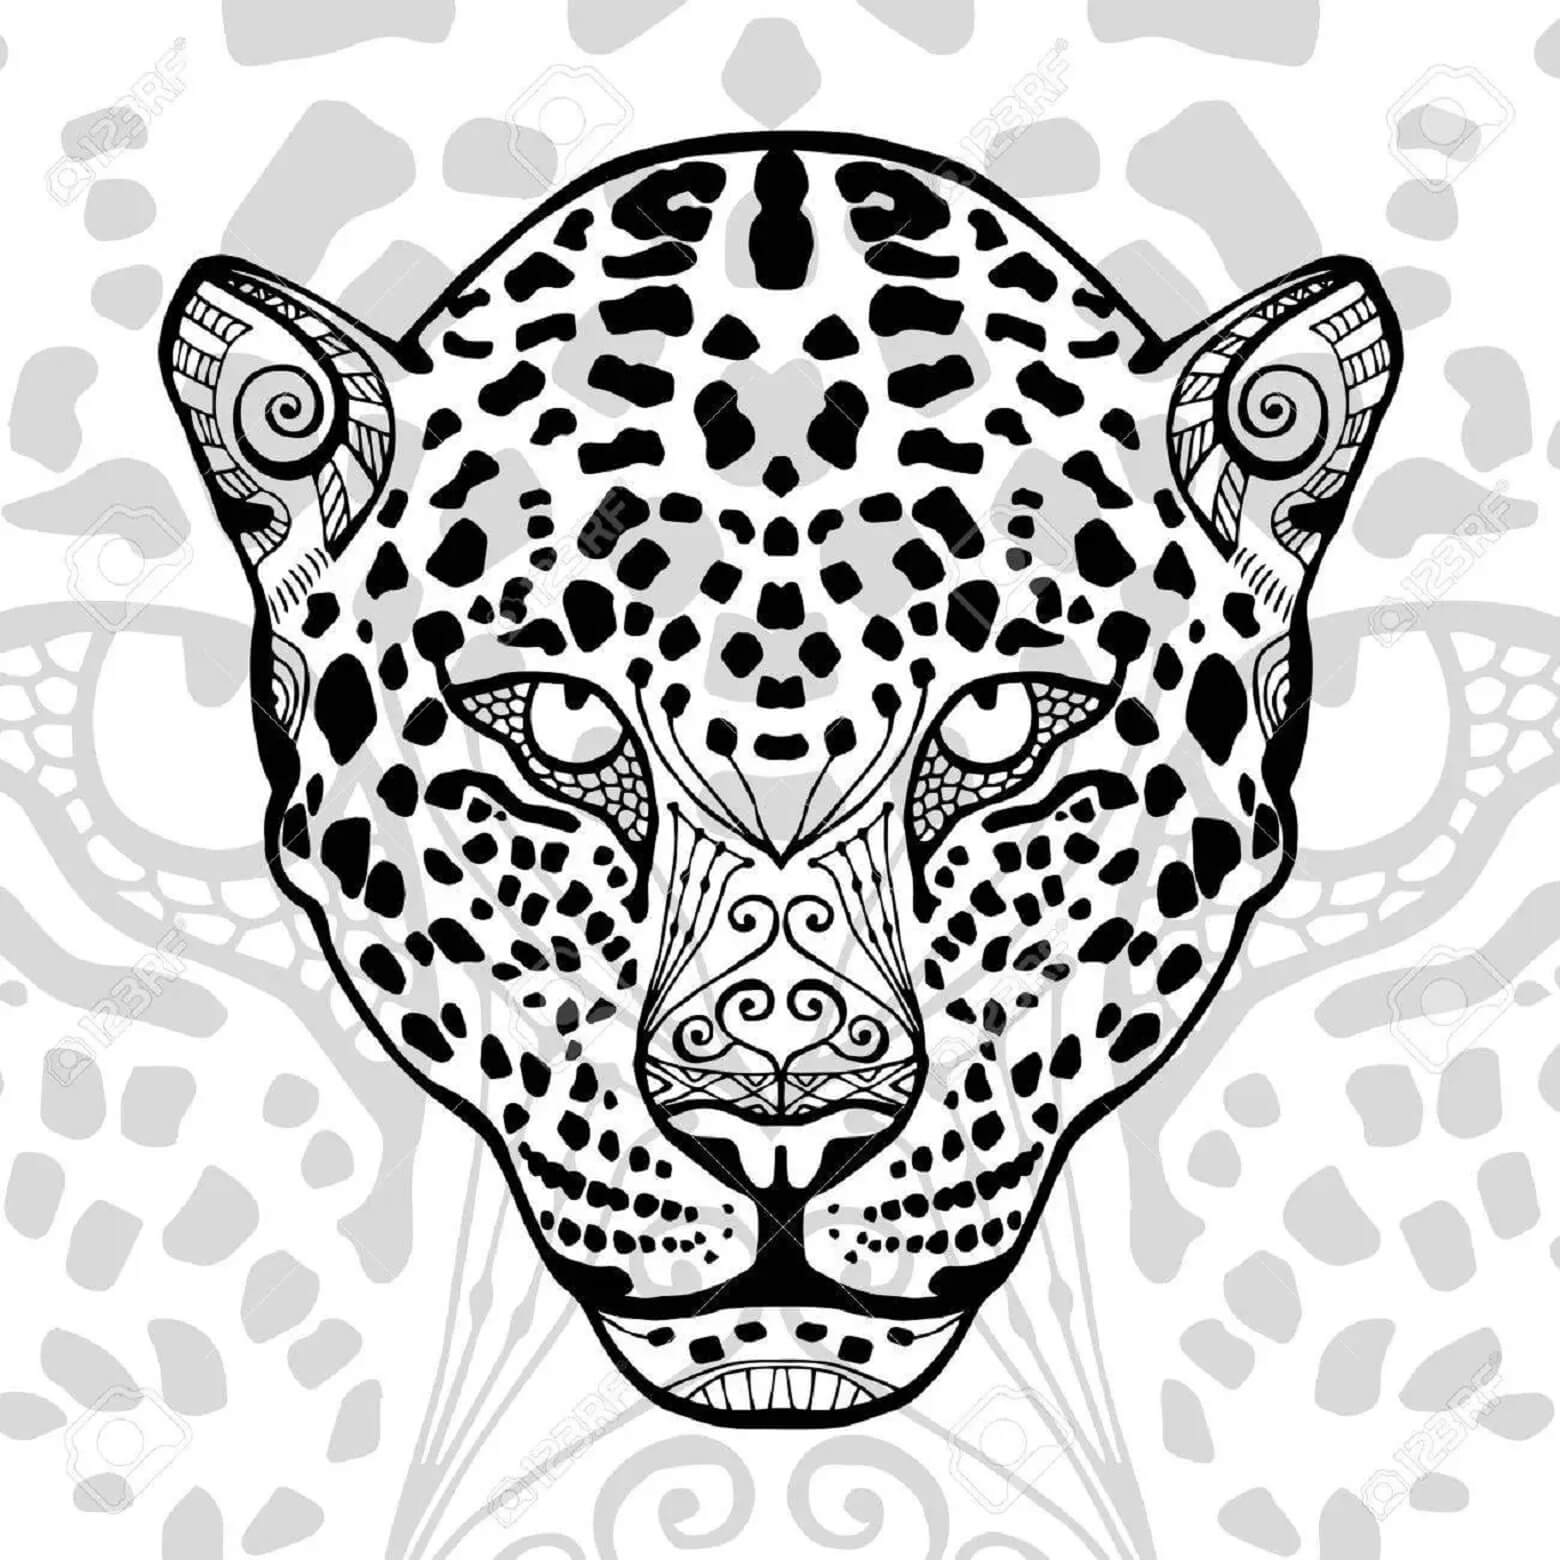 Mandala Cheetah Face Coloring Page - Sheet 1 Mandalas